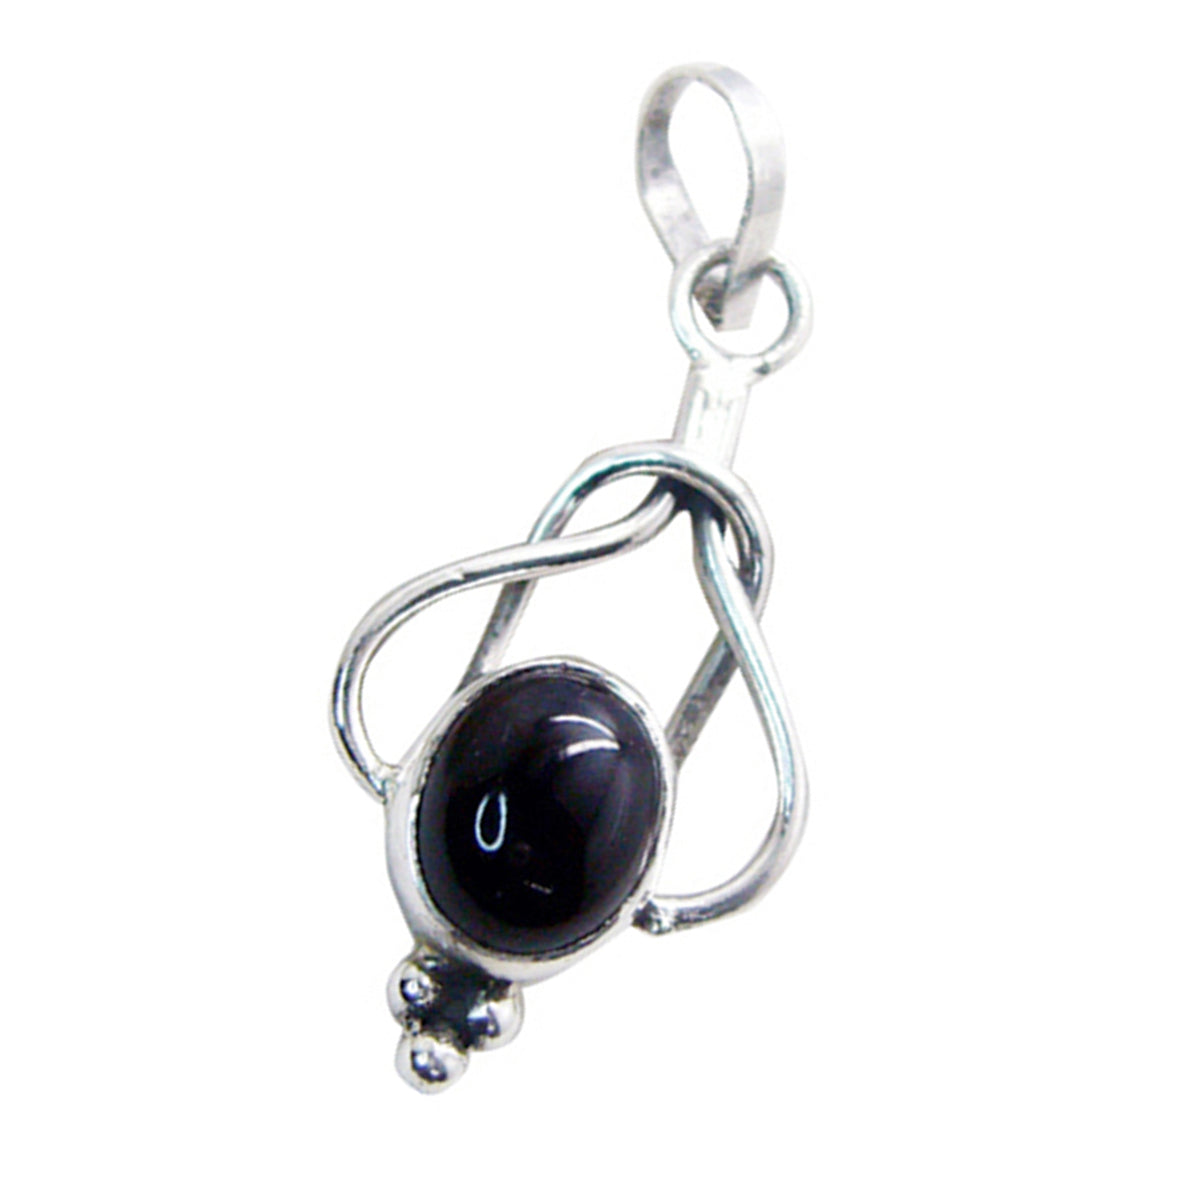 Riyo Attractive Gemstone Oval Cabochon Black Black Onyx 949 Sterling Silver Pendant Gift For Birthday